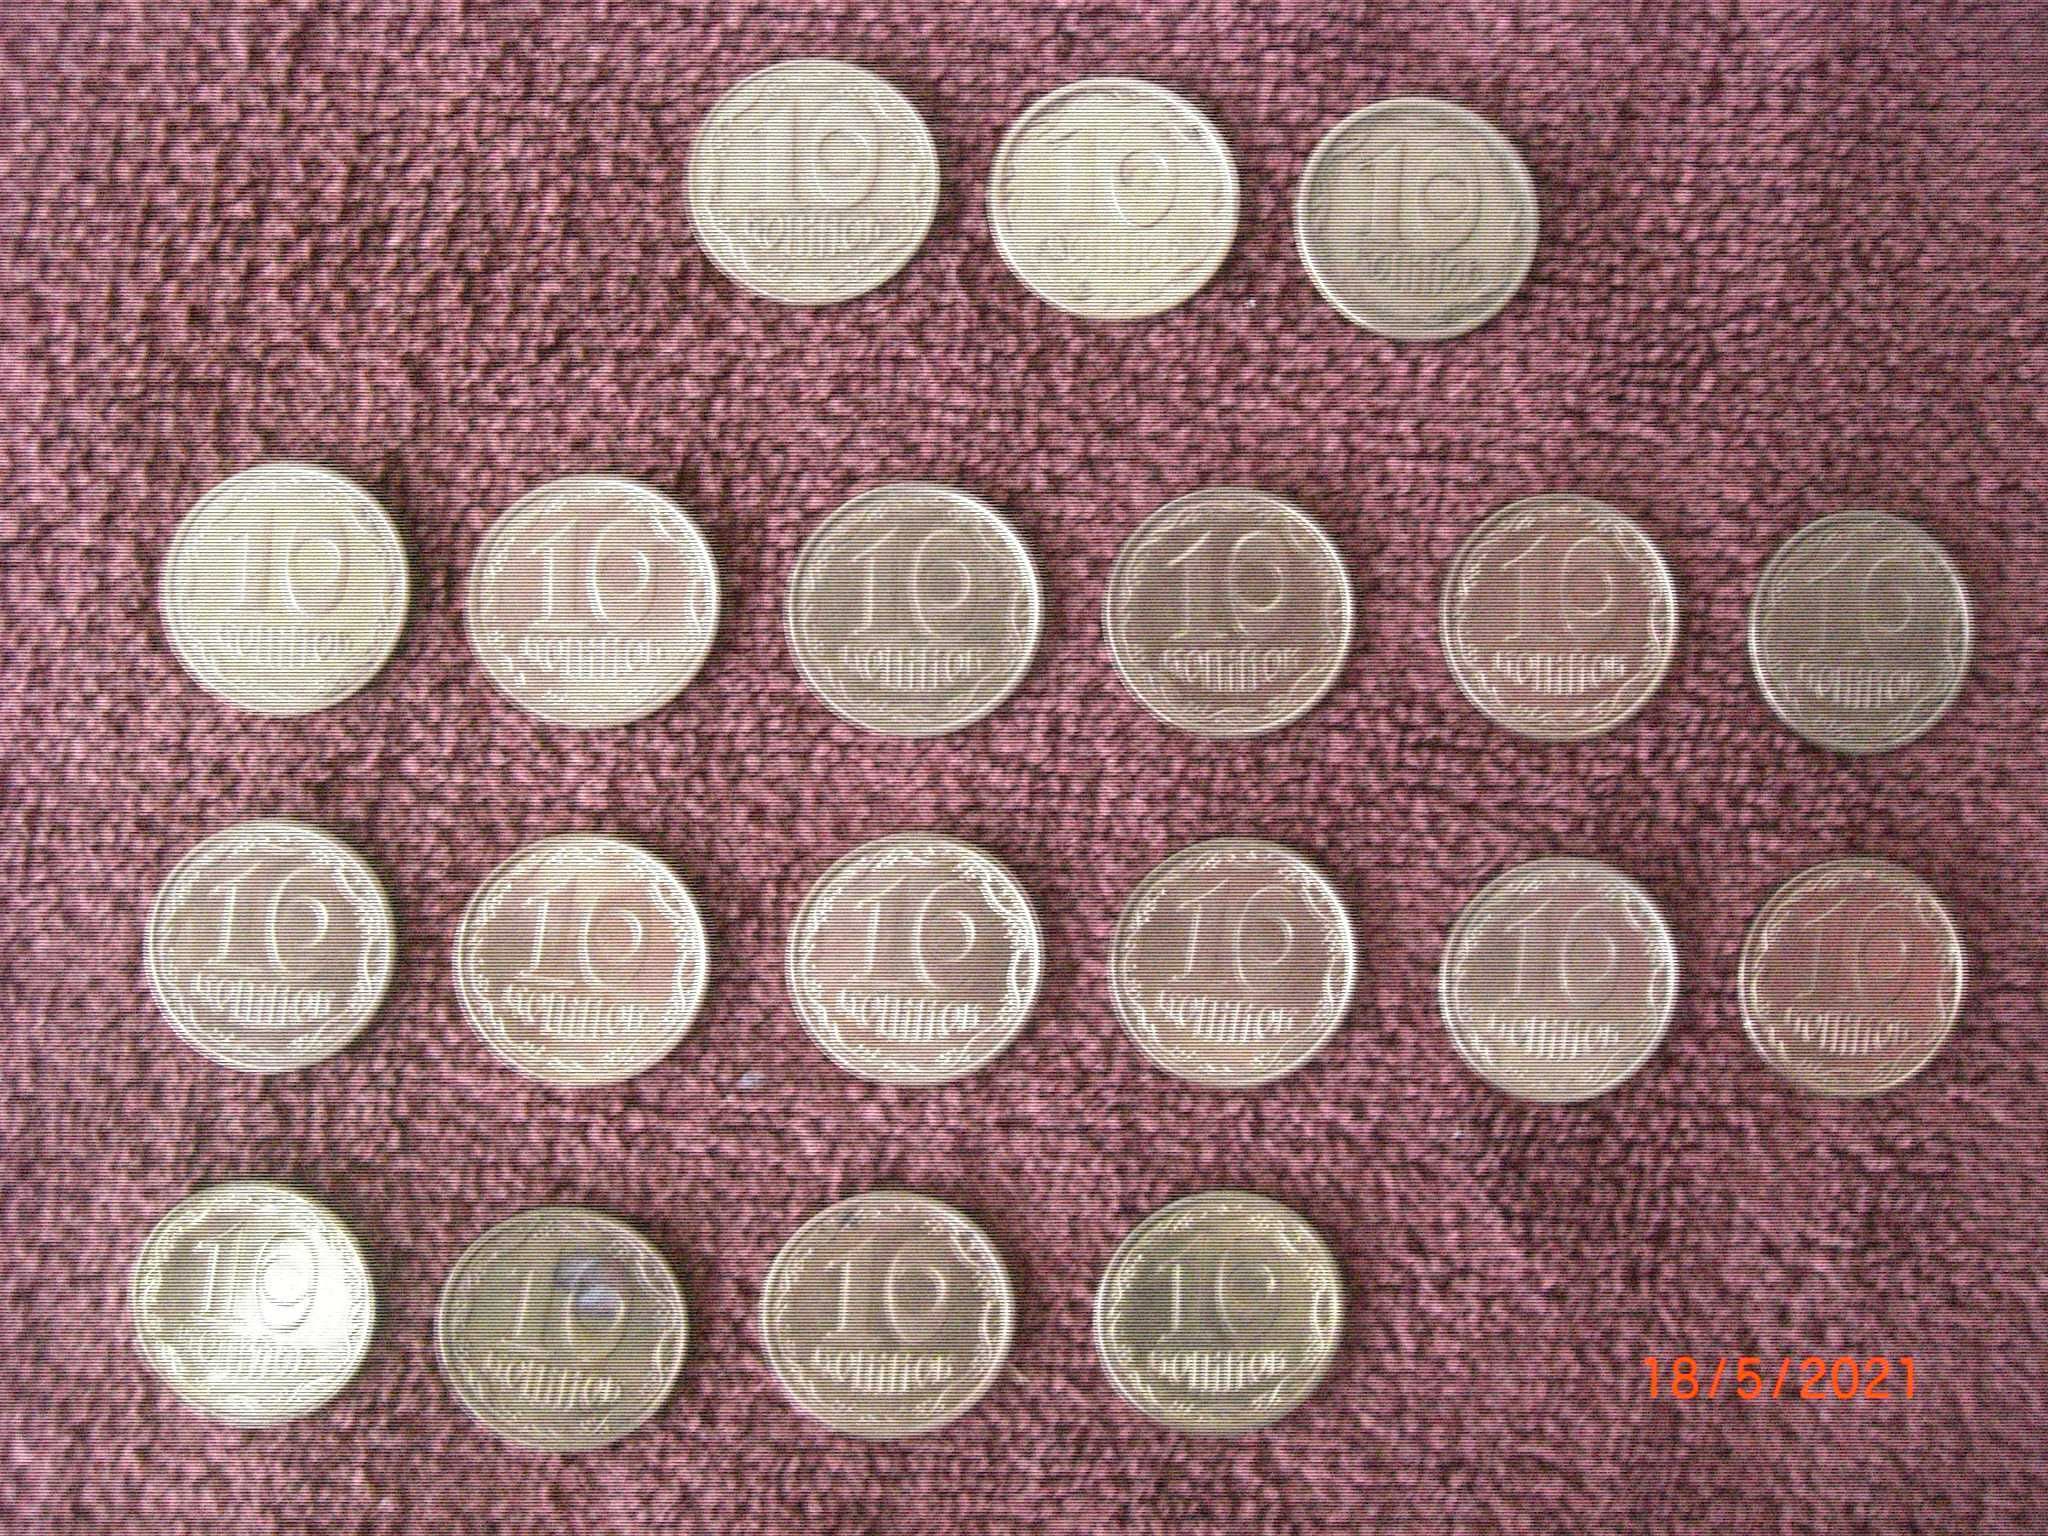 обиходные монеты Украины 10коп ( 1992г - 2019г ) - 19 штук